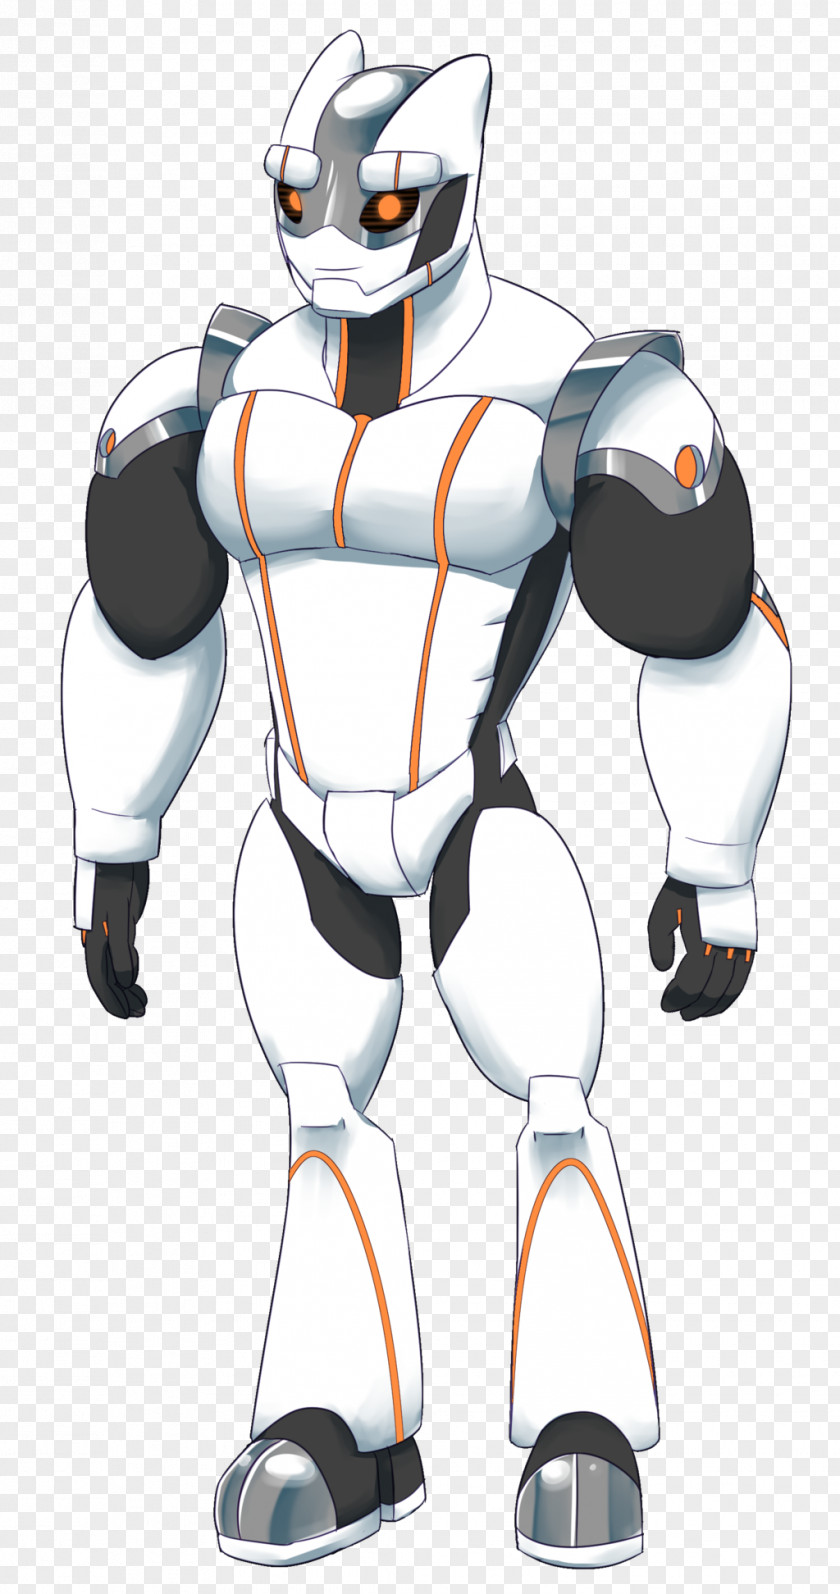 Robot Cartoon Character PNG